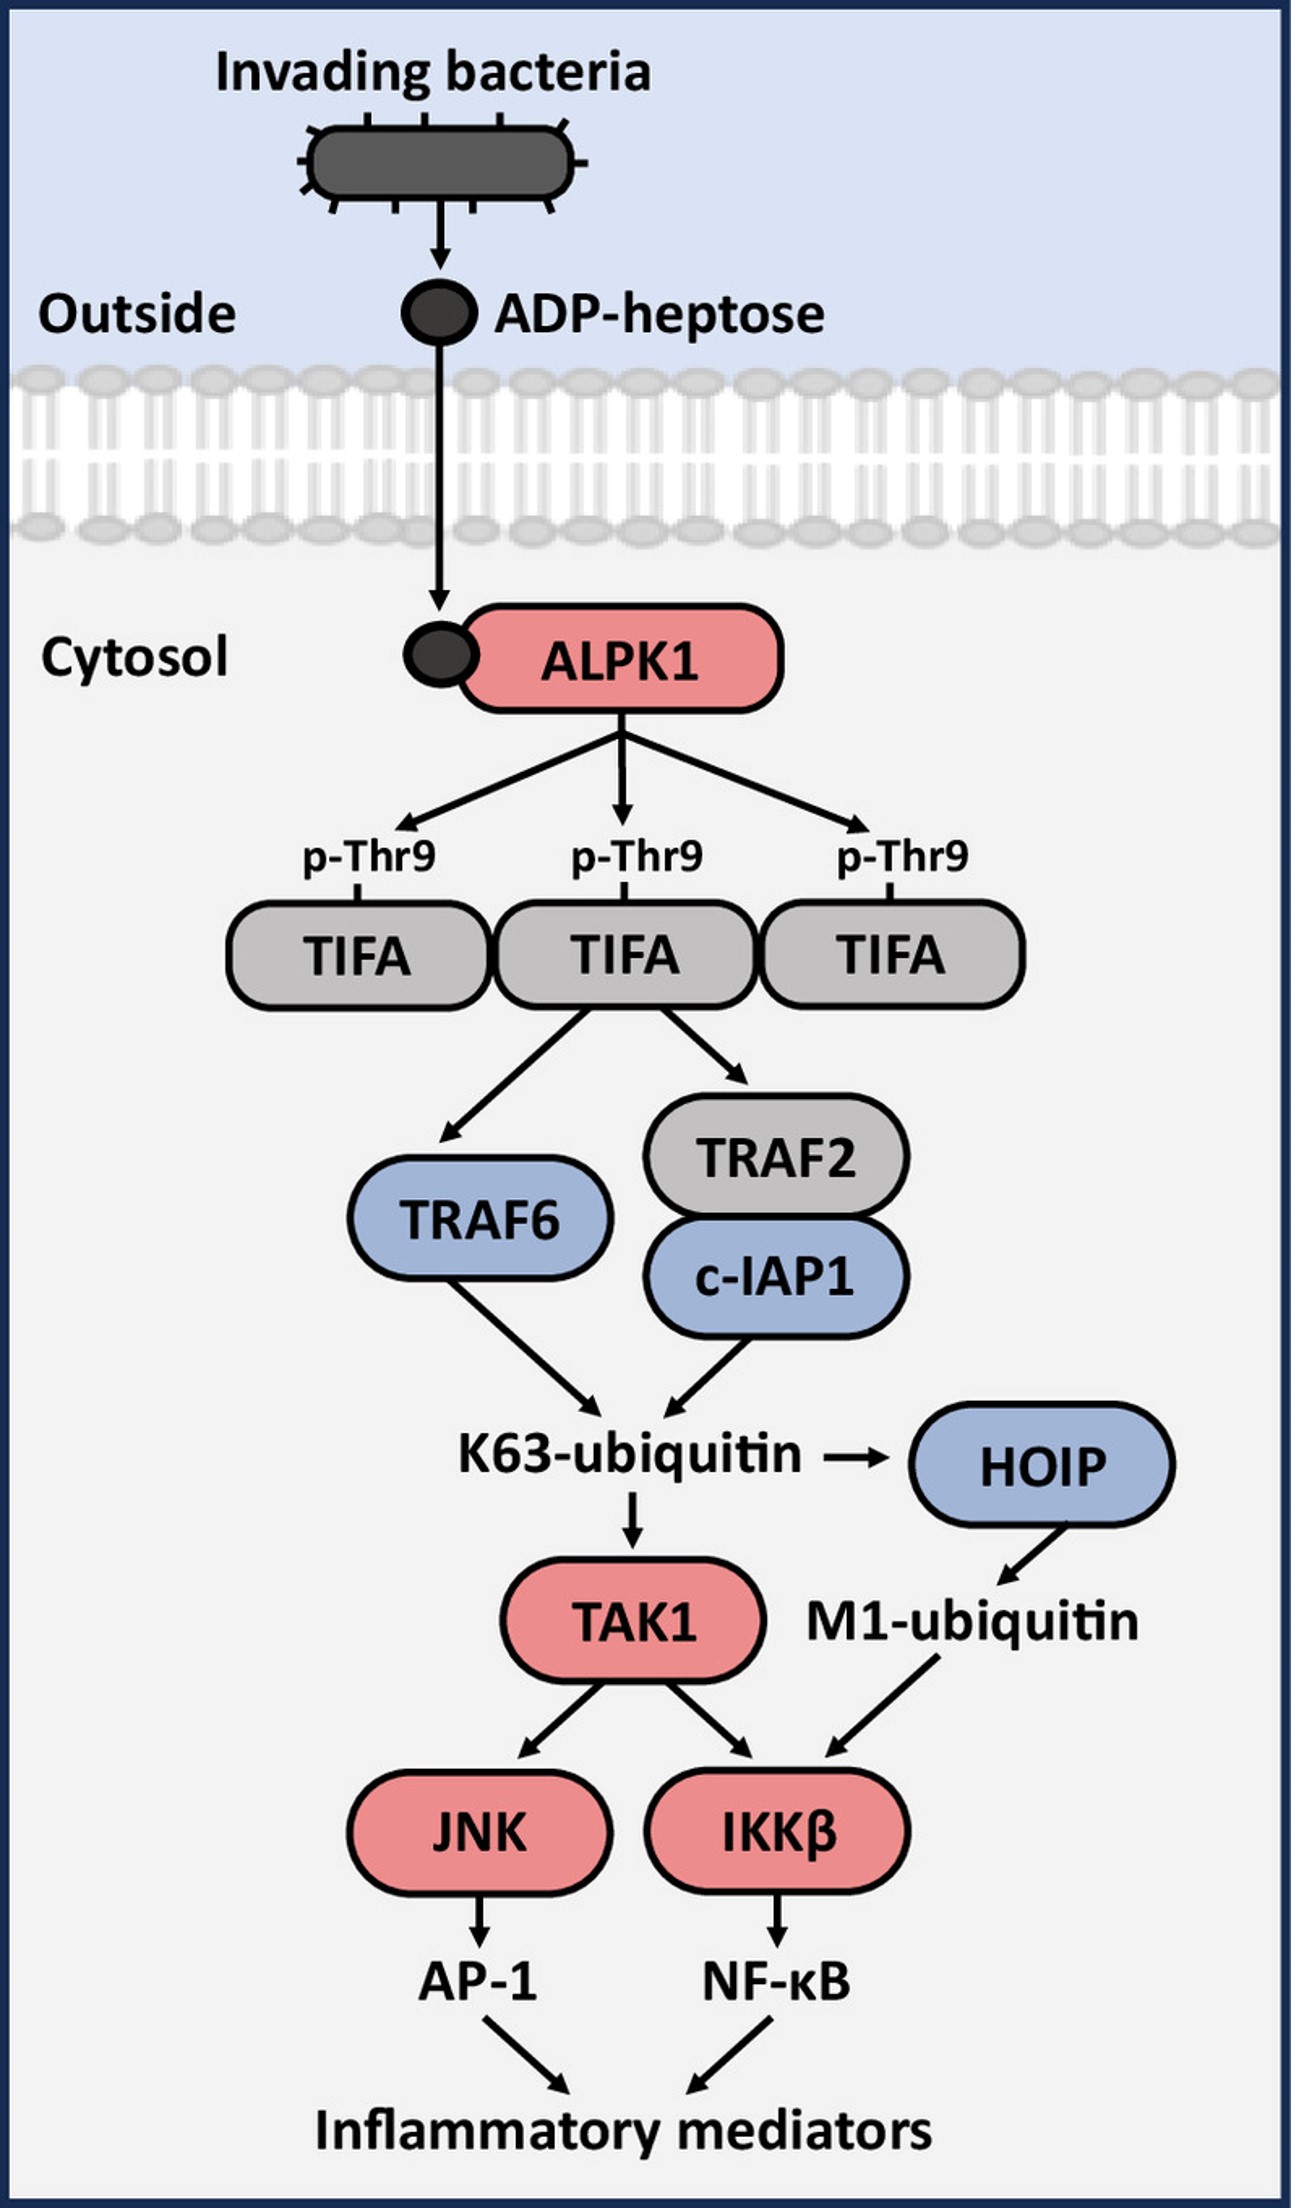 The ADP-heptose-ALPK1-TIFA signalling pathway